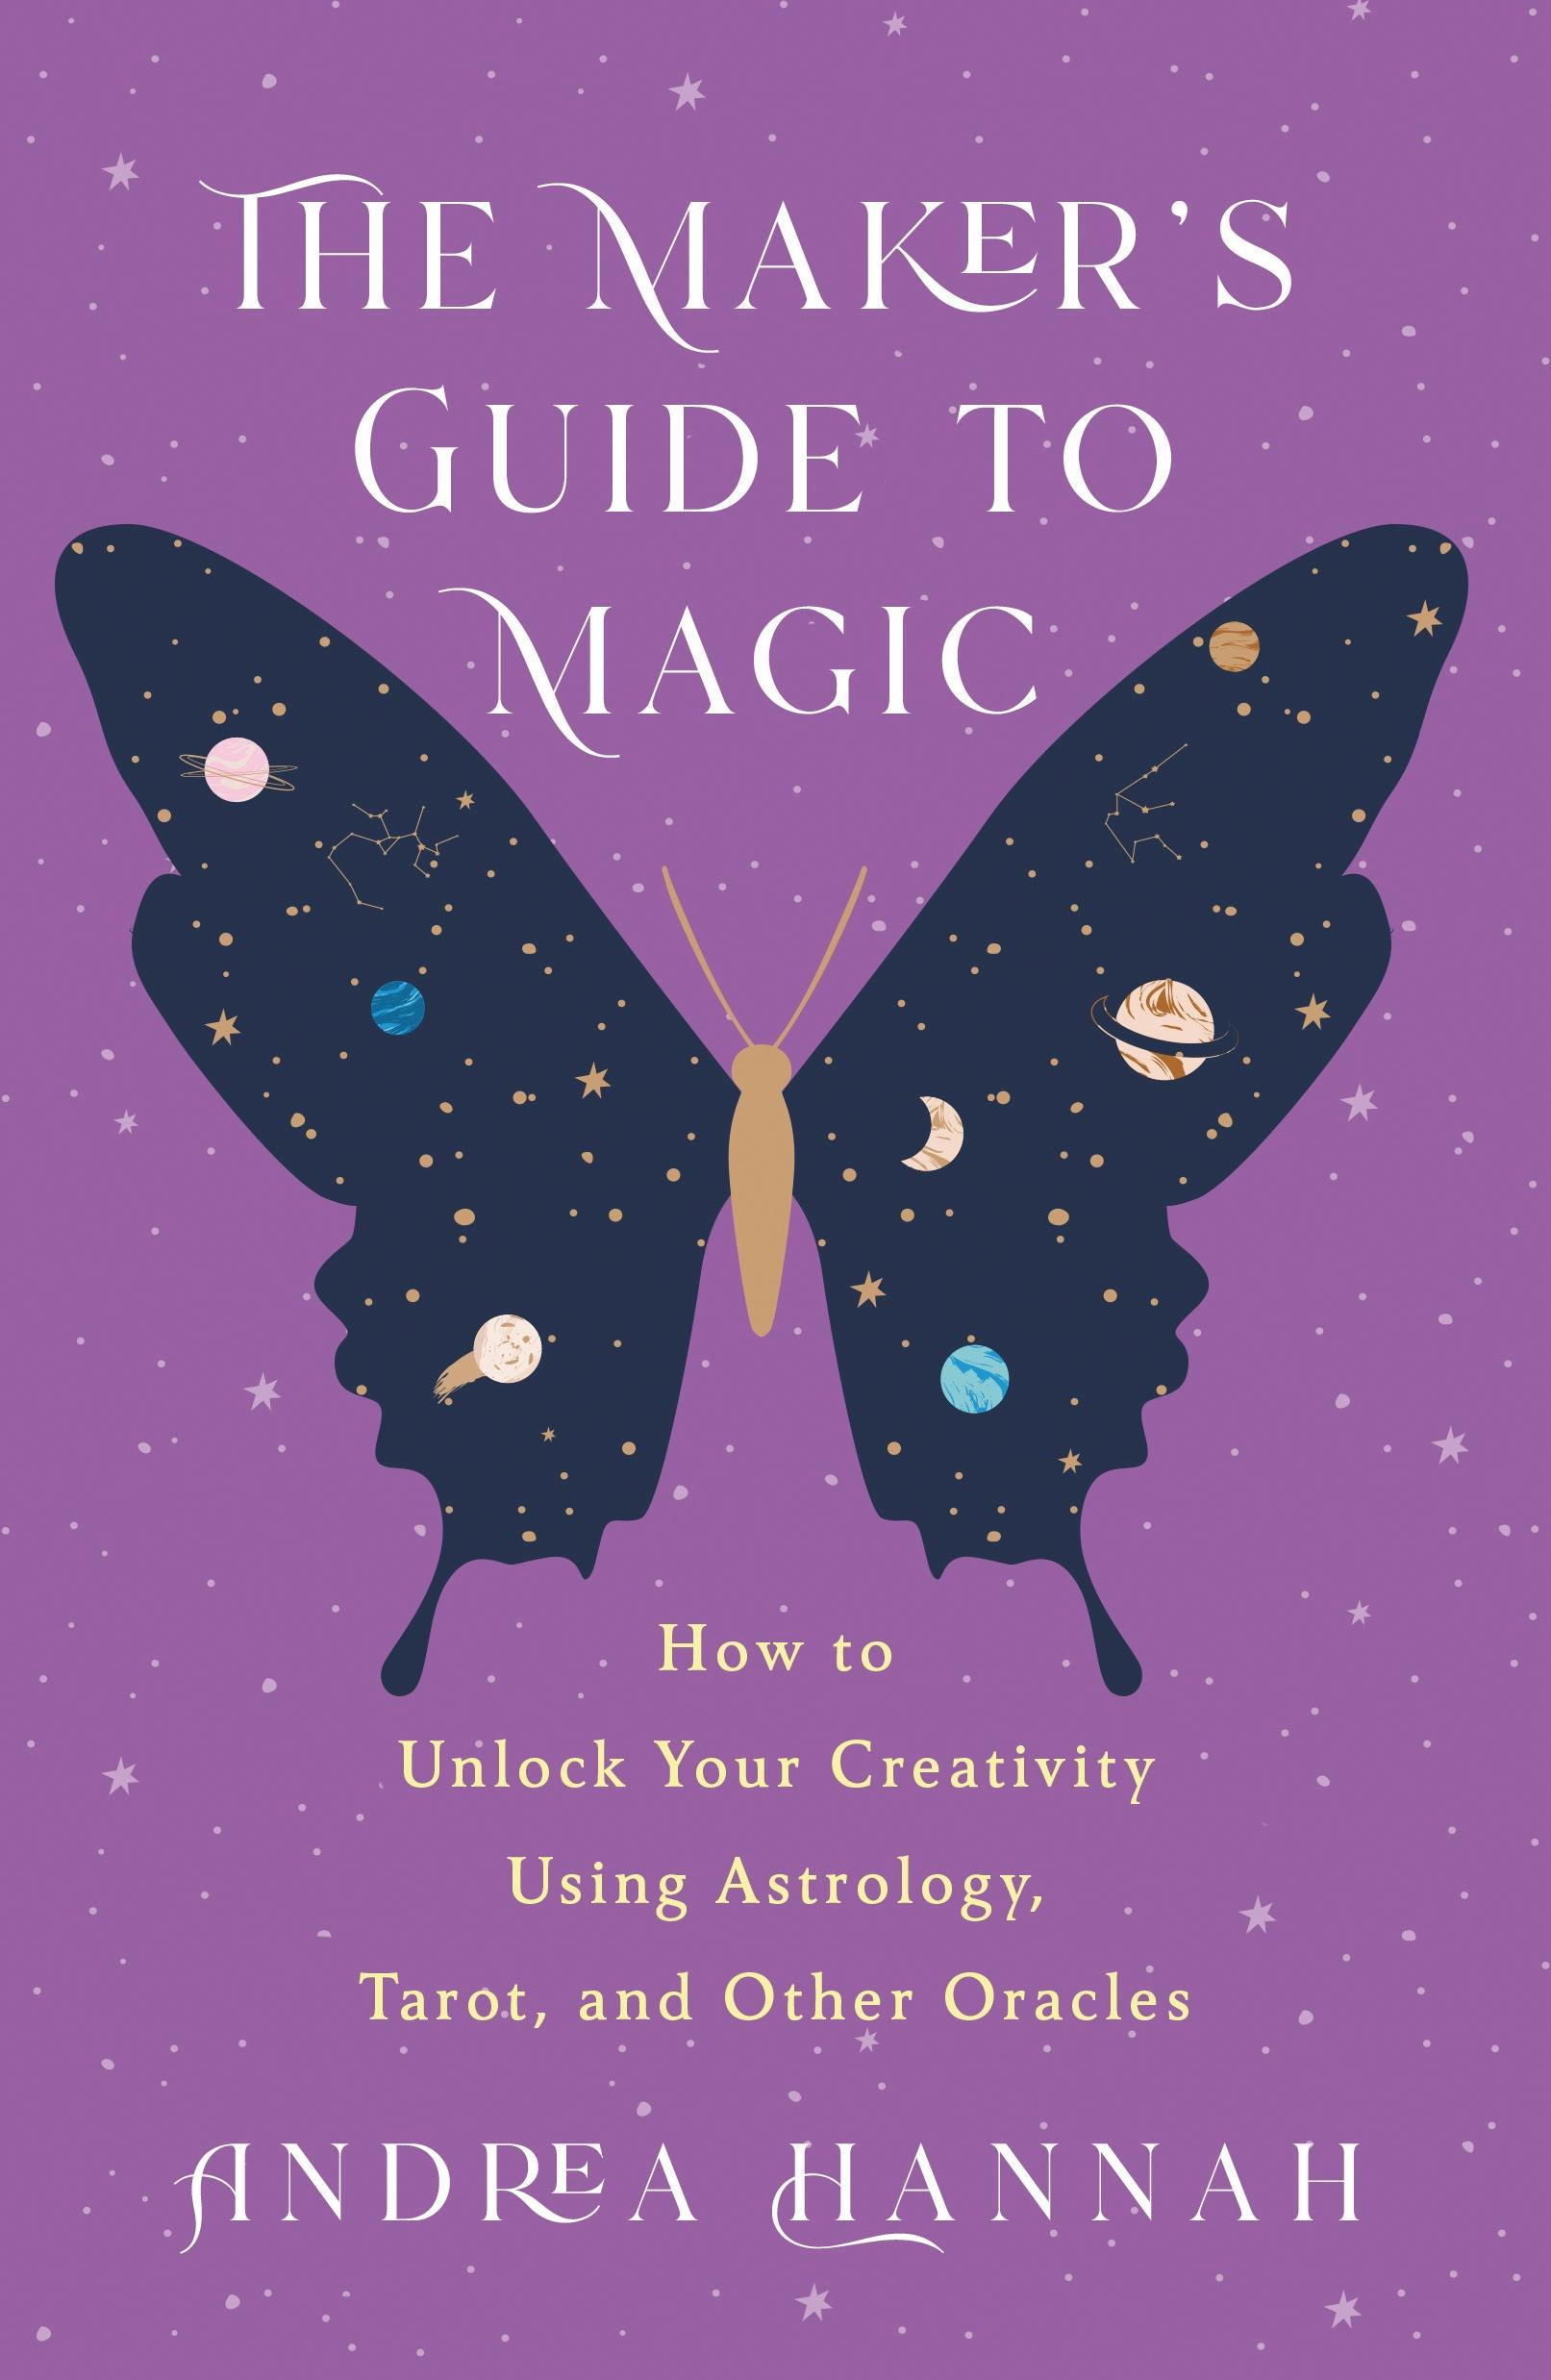 Are You A Magic Maker? – megokeefebooks